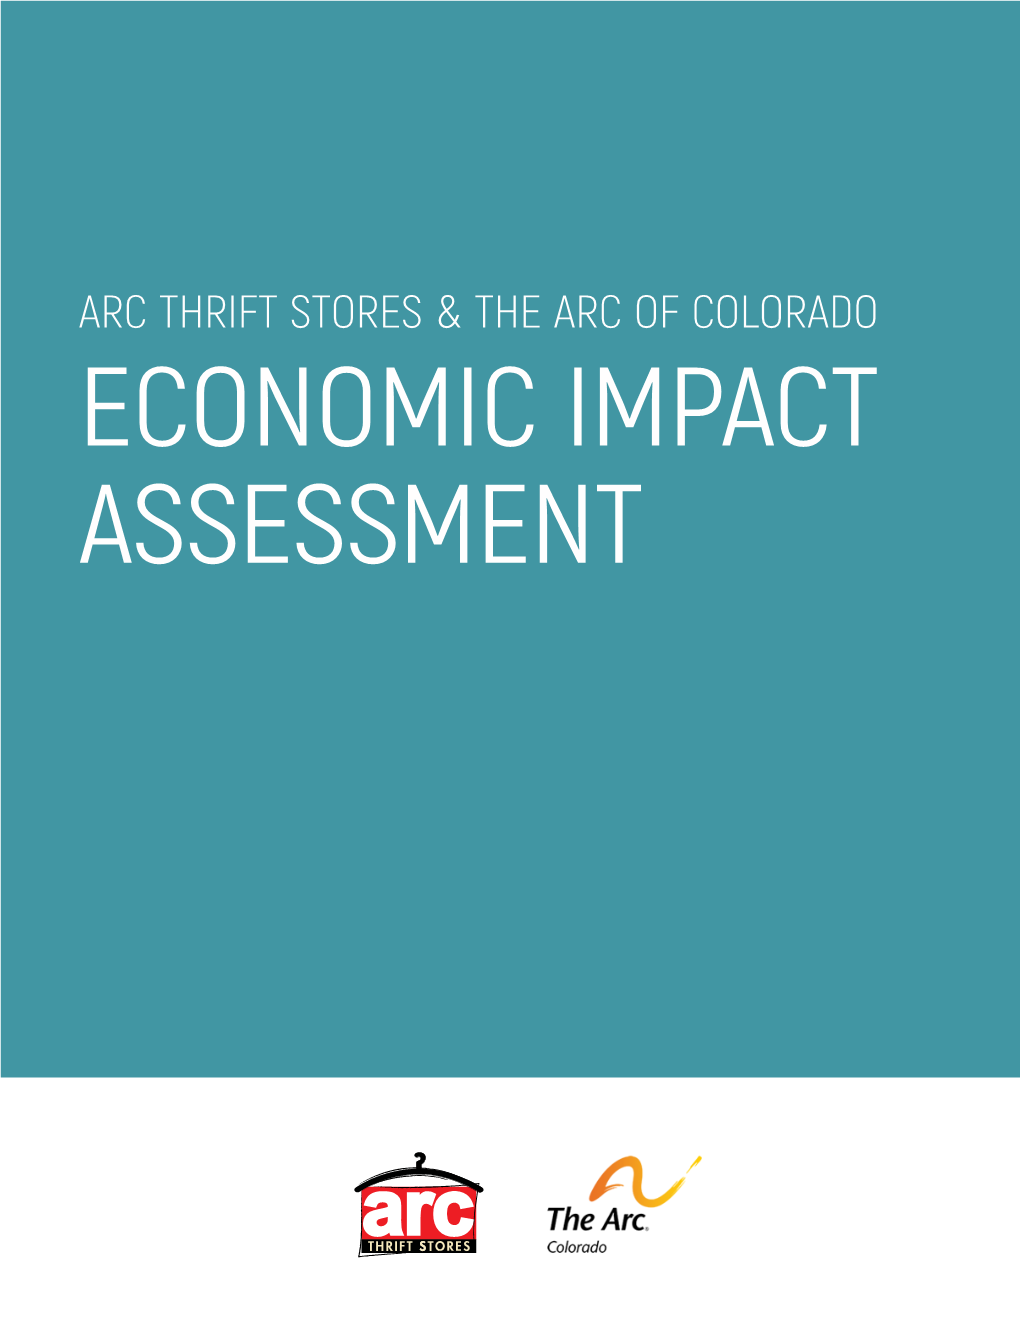 Economic Impact Study | 2 Our Partnership